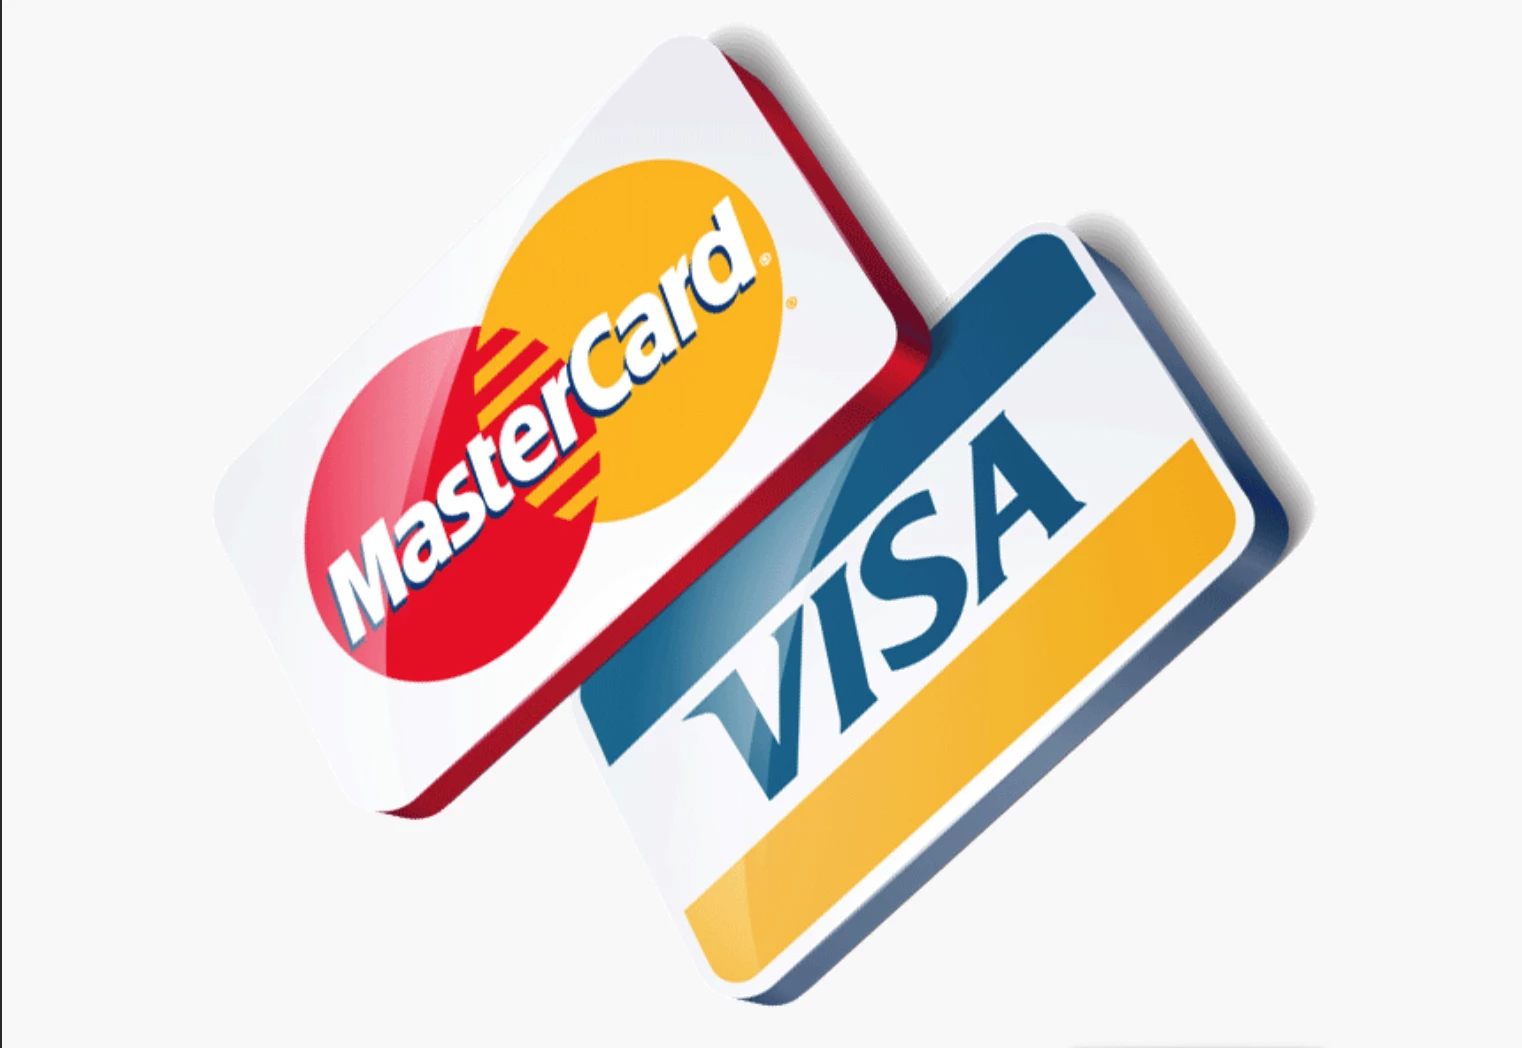 Оплата картой. Карты виза и Мастеркард. Значок оплаты банковскими картами. Значки кредитных карт.